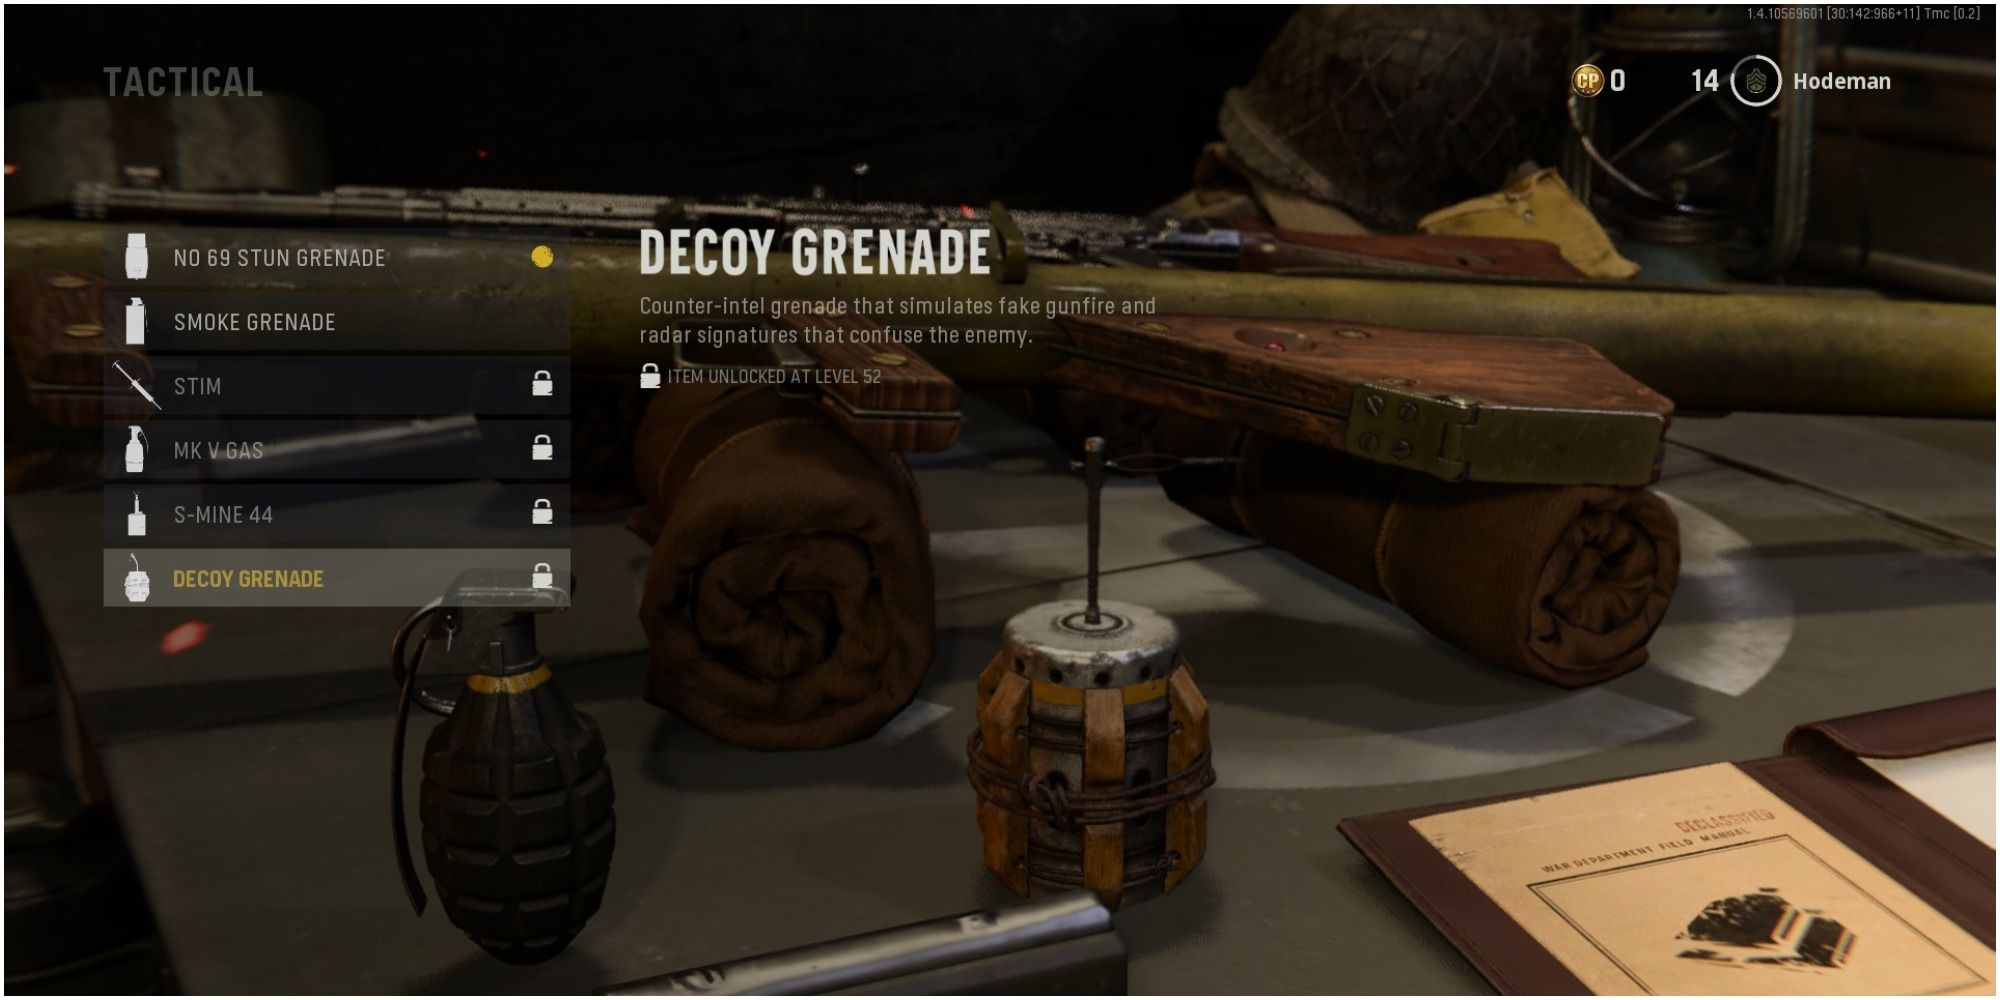 Call Of Duty Vanguard Description On The Tactical Decoy Grenade